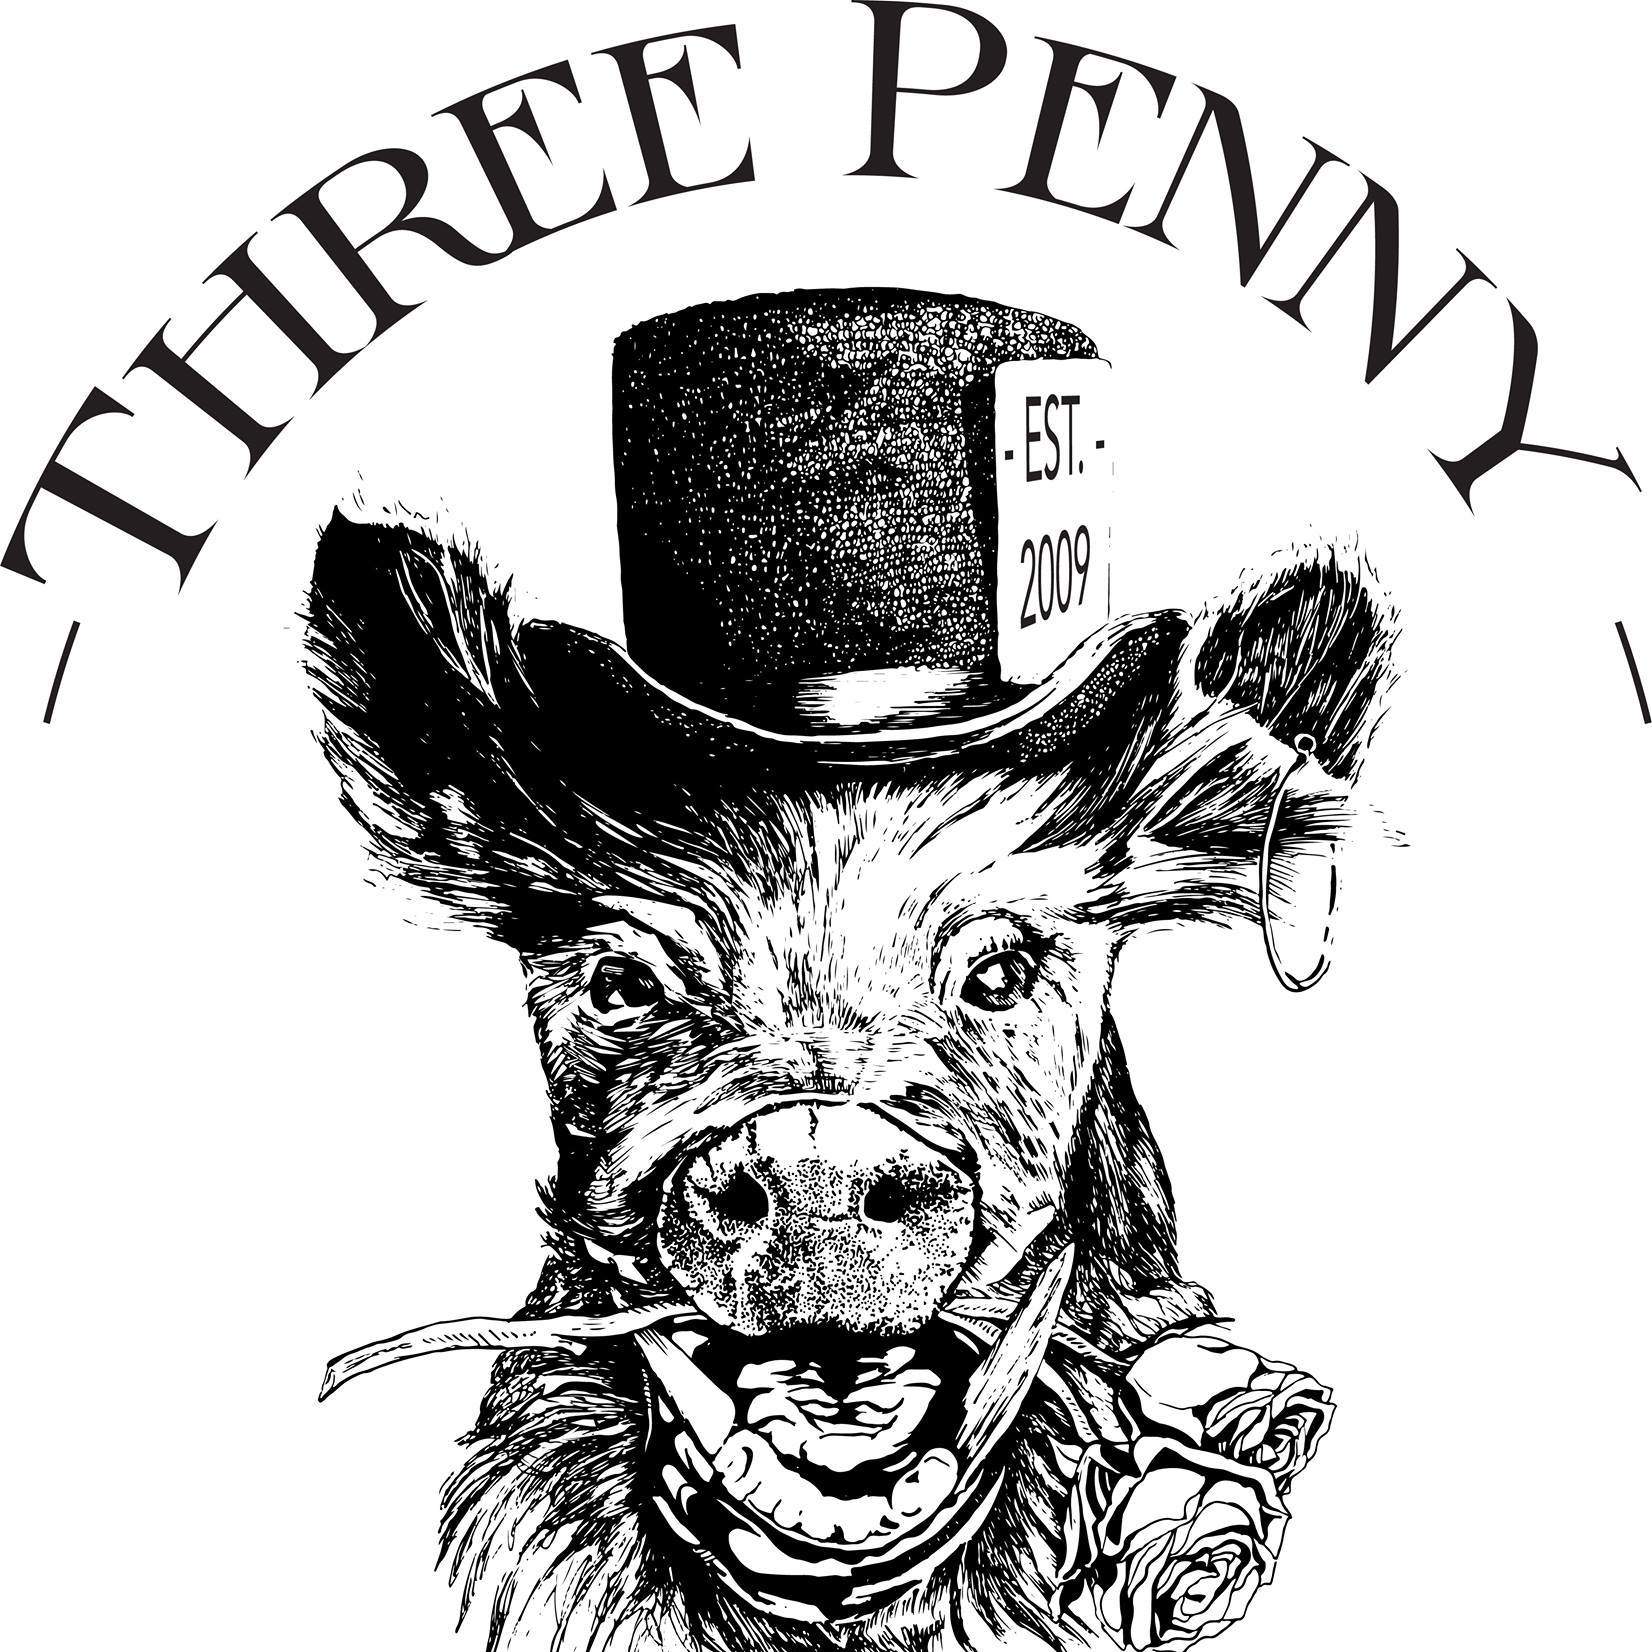 Three Penny Taproom